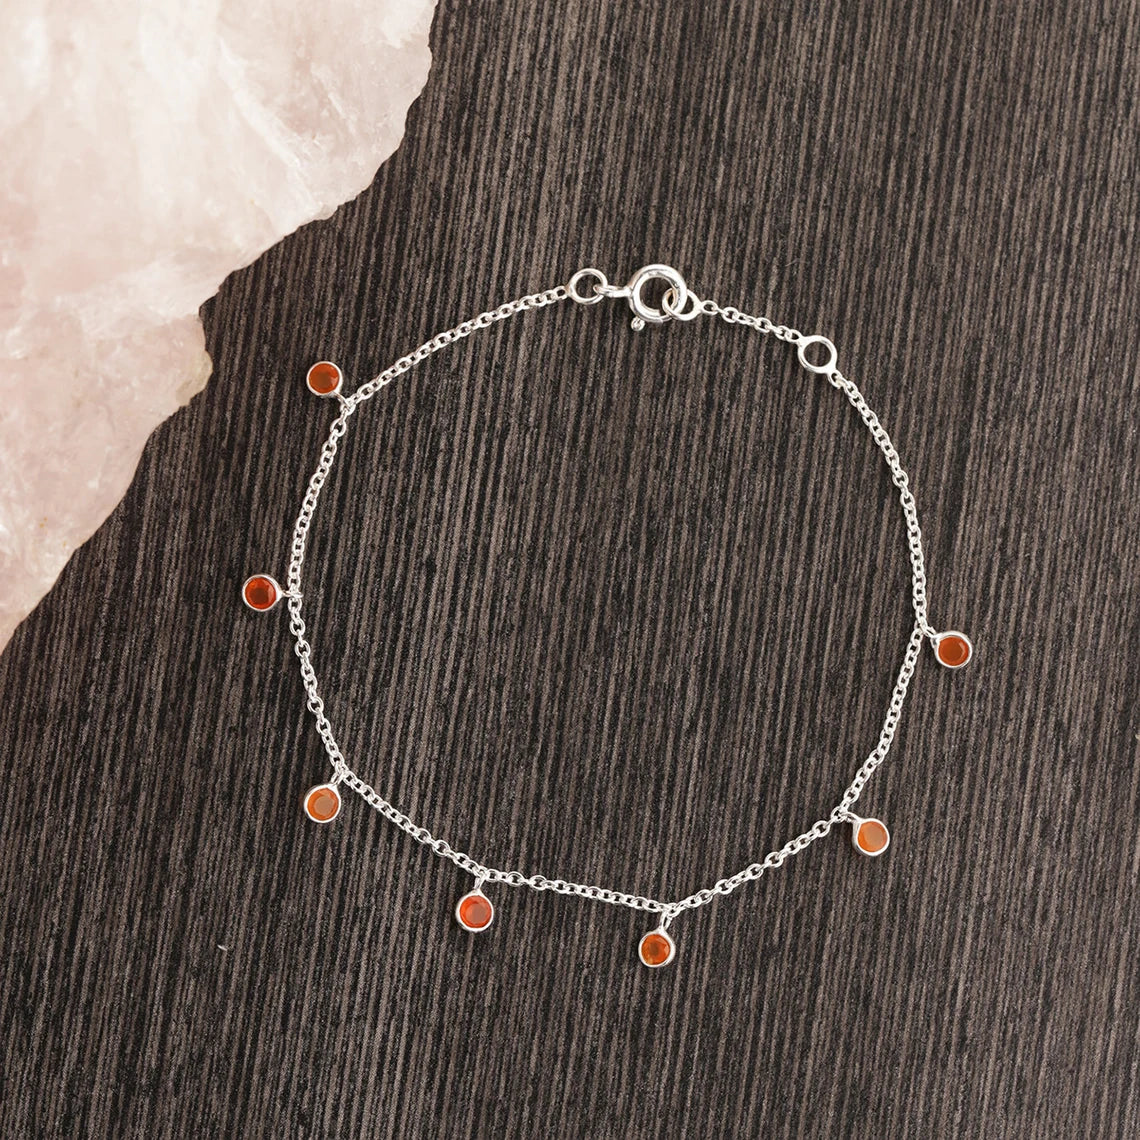 Carnelian Silver Bracelet, thin delicate bracelet, Tiny carnelian, round gemstone, round cut bracelet, simple bracelet Handmade